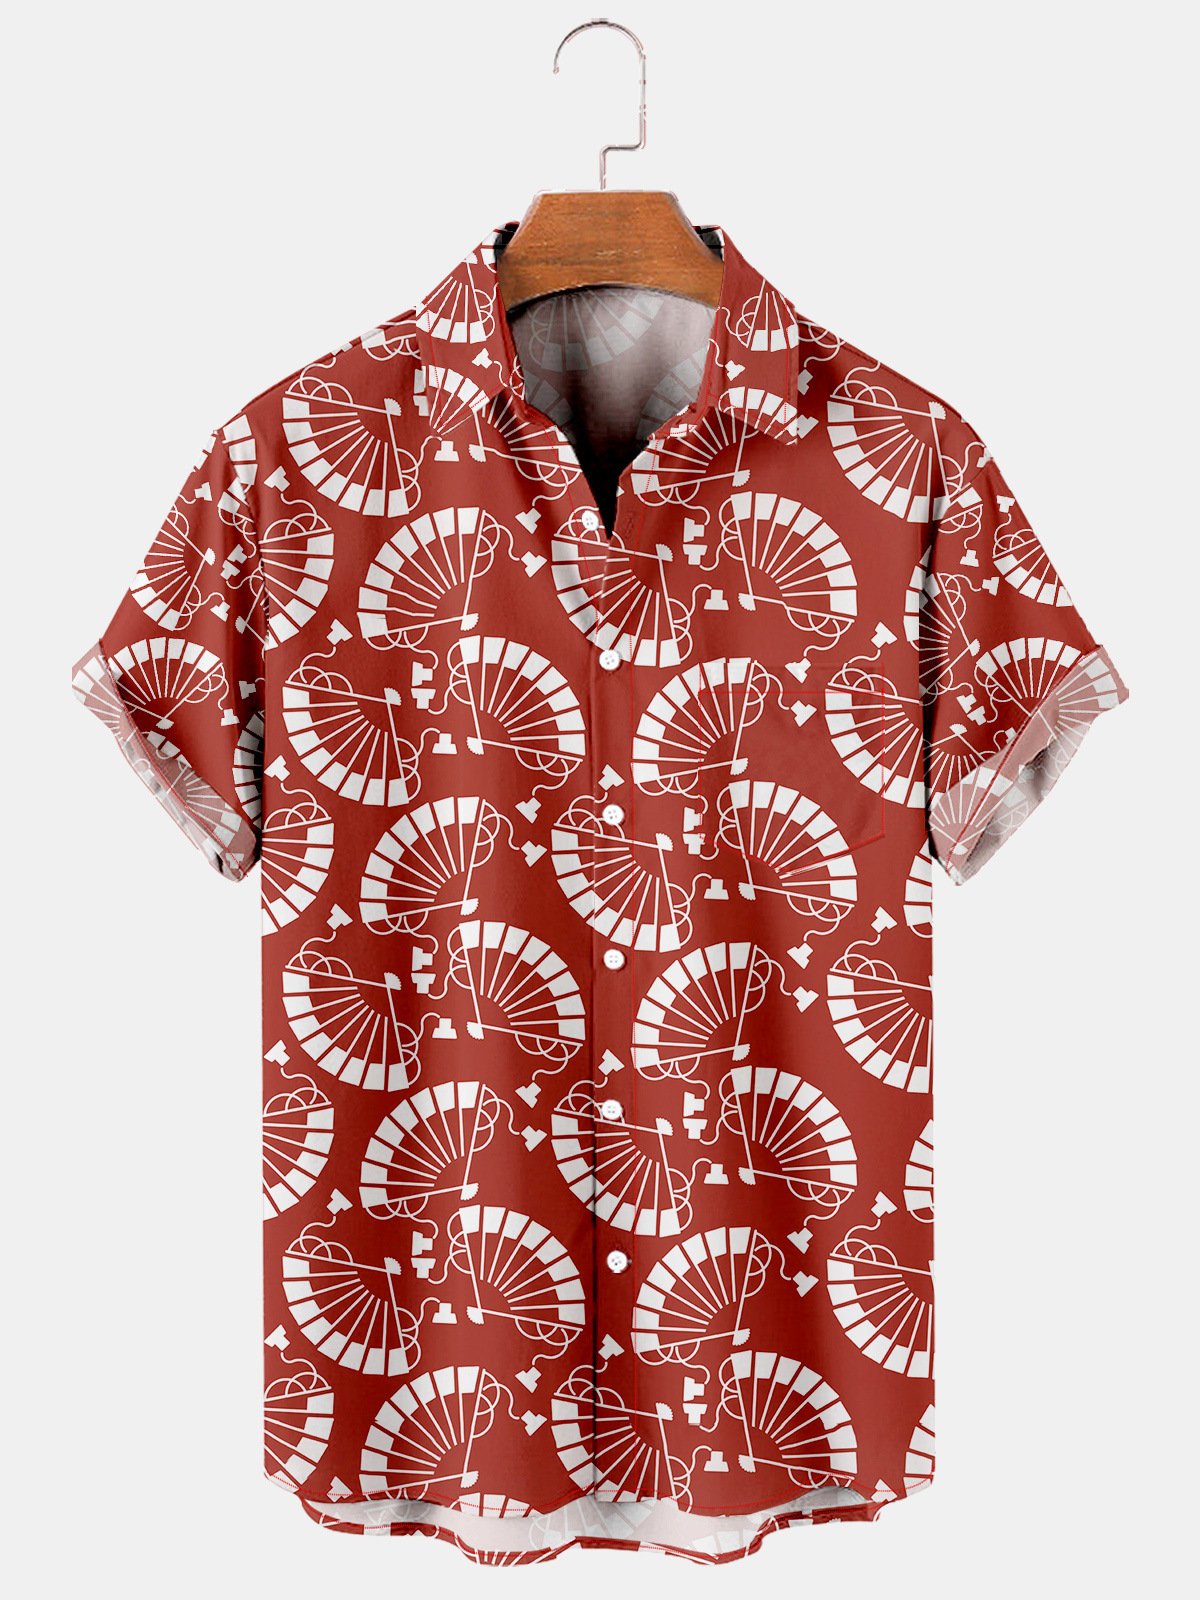 Japanese Traditional Graphic Men's Casual Hawaiian Short Sleeve Shirt